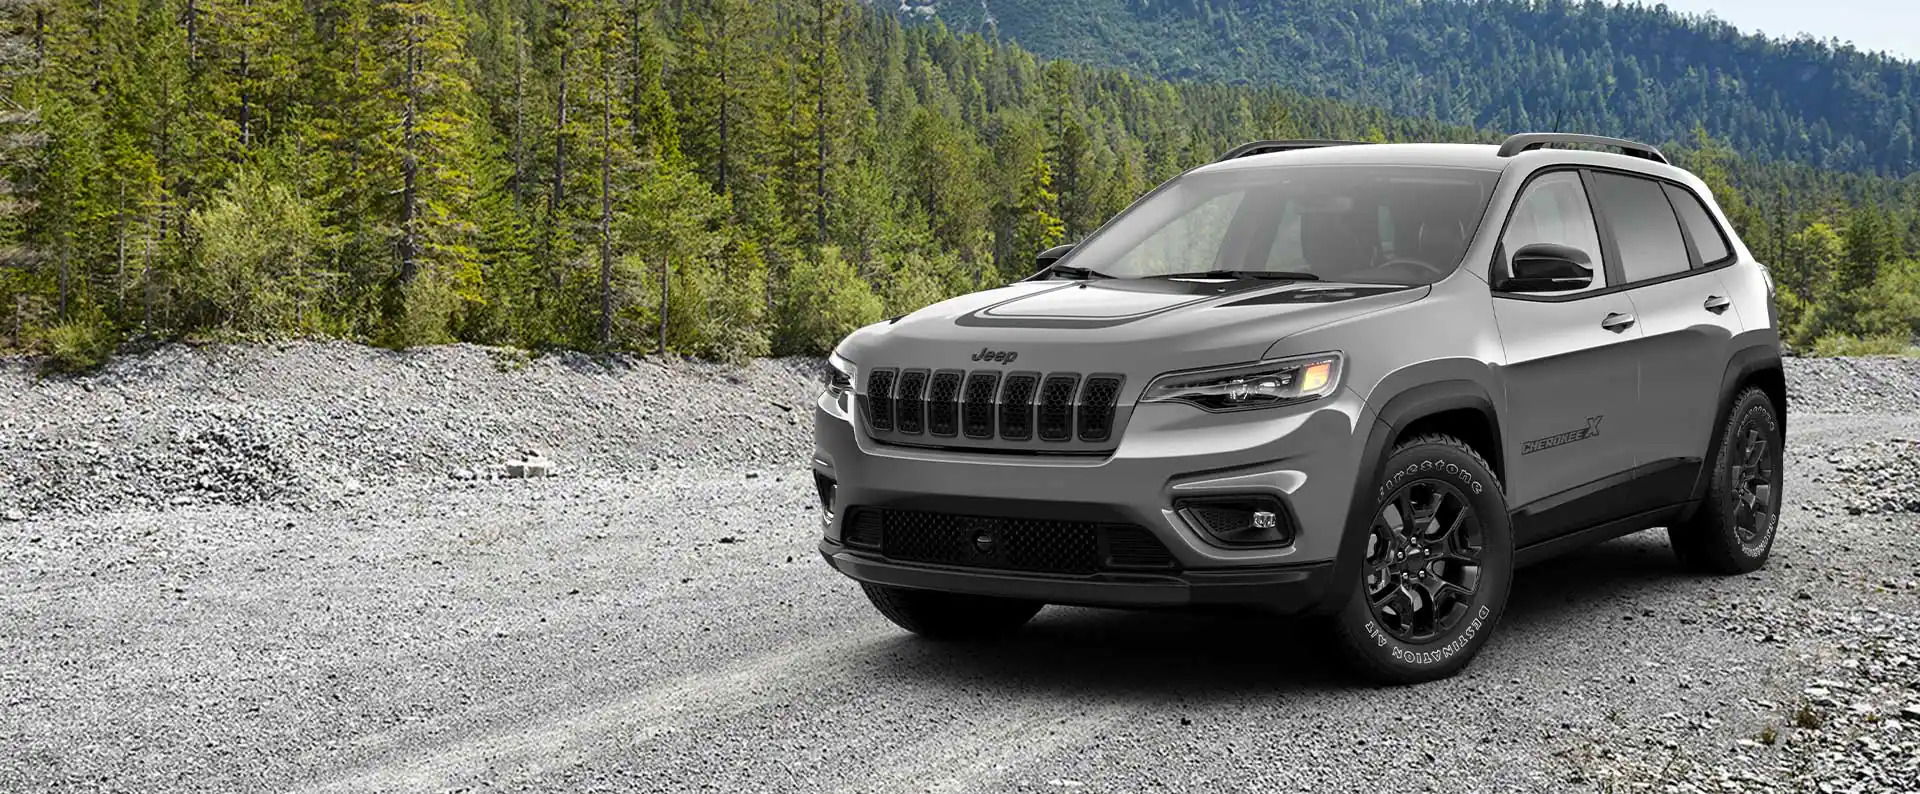 2022 Jeep Cherokee-Overview X-Hero Via Jeep